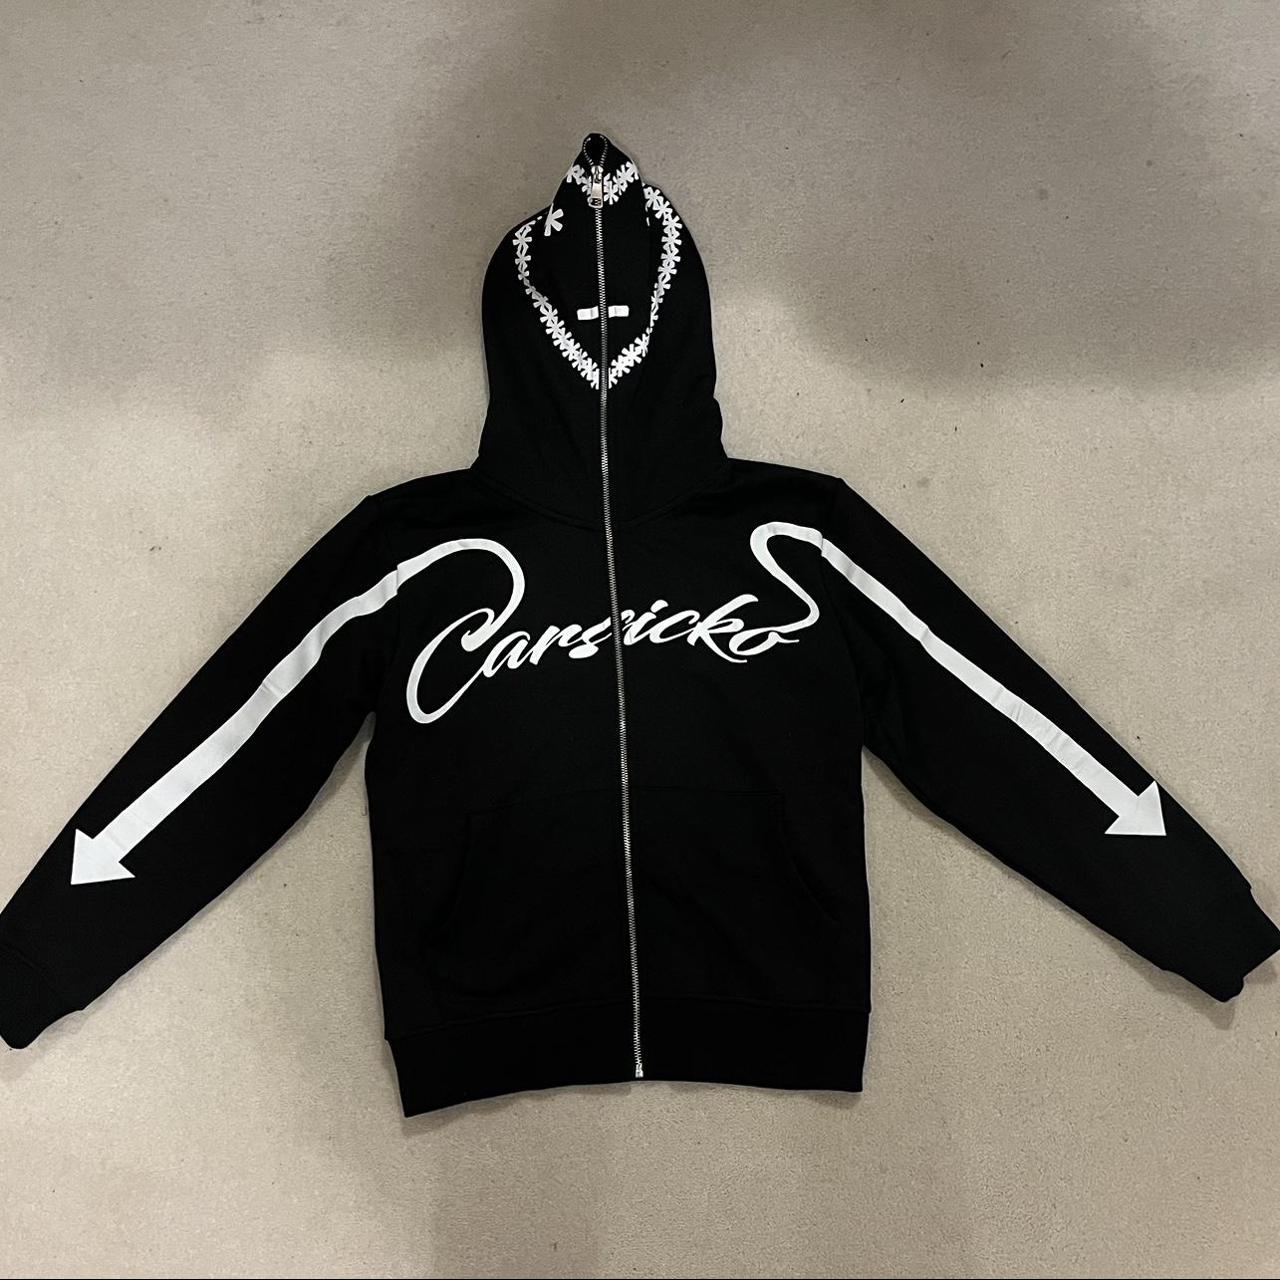 Carsicko love spread hoodie - limited edition no... - Depop